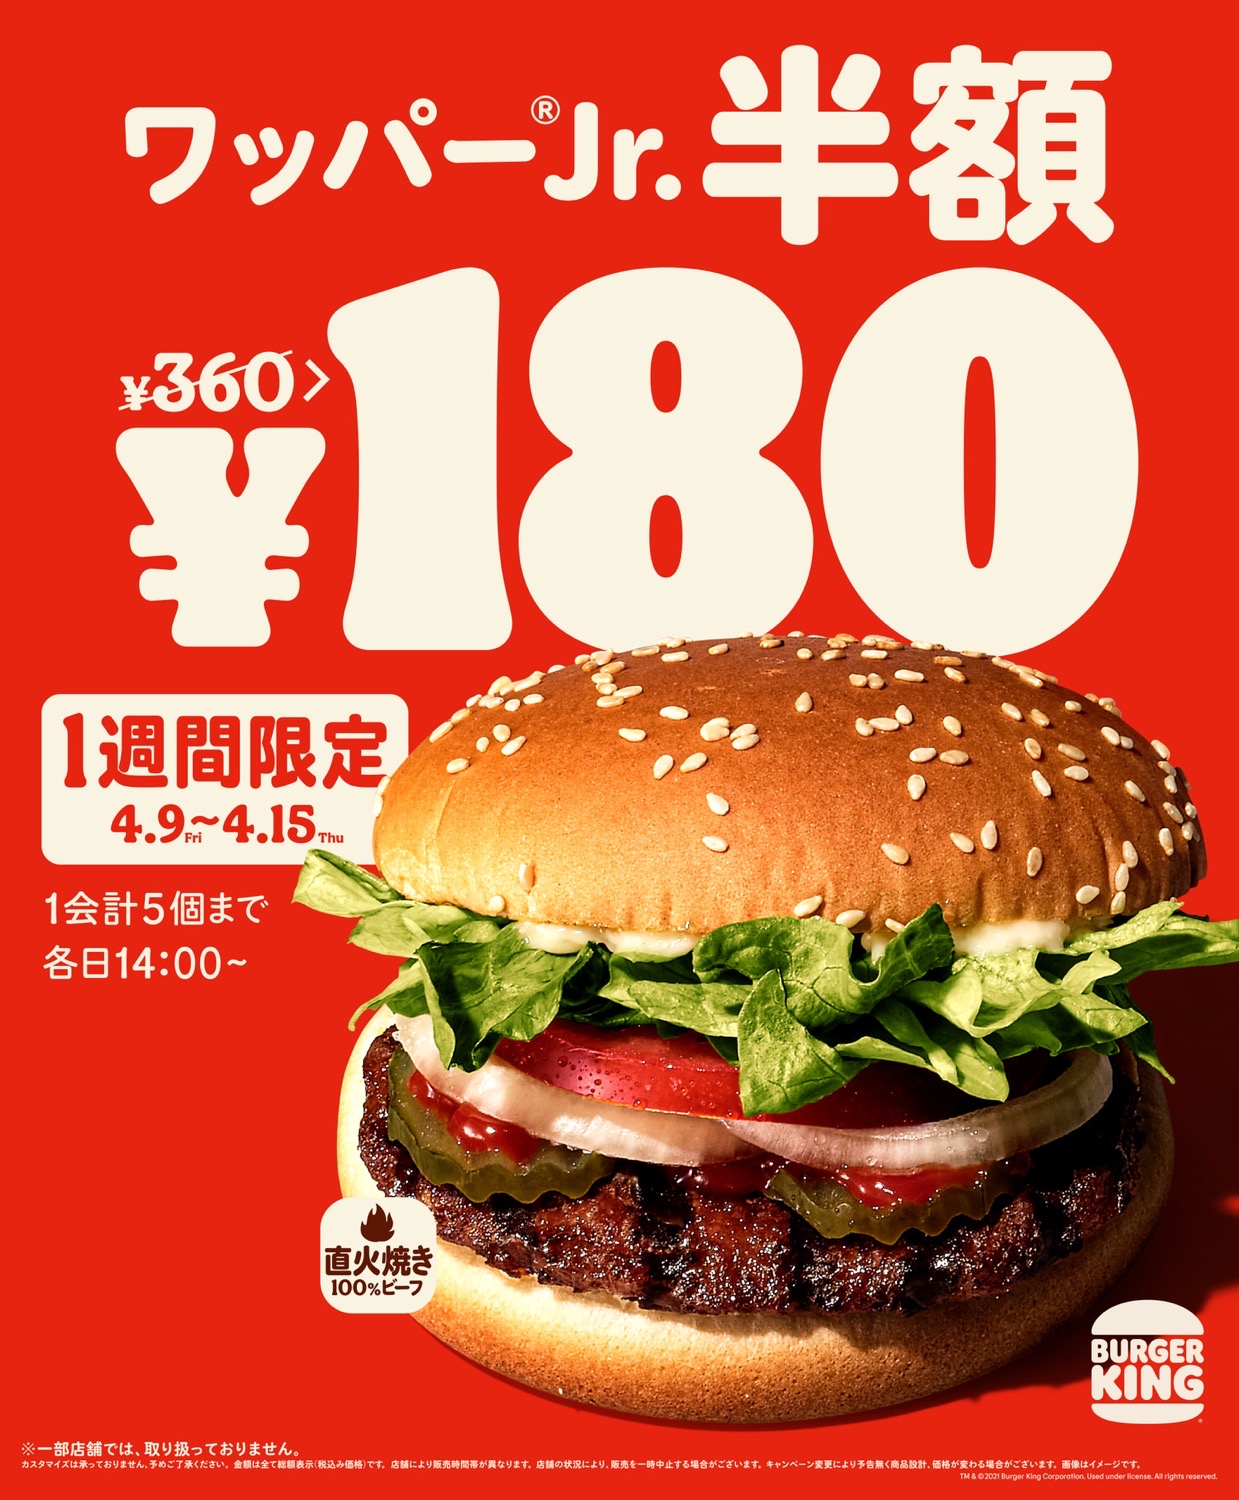 Burgerking 180 01 04